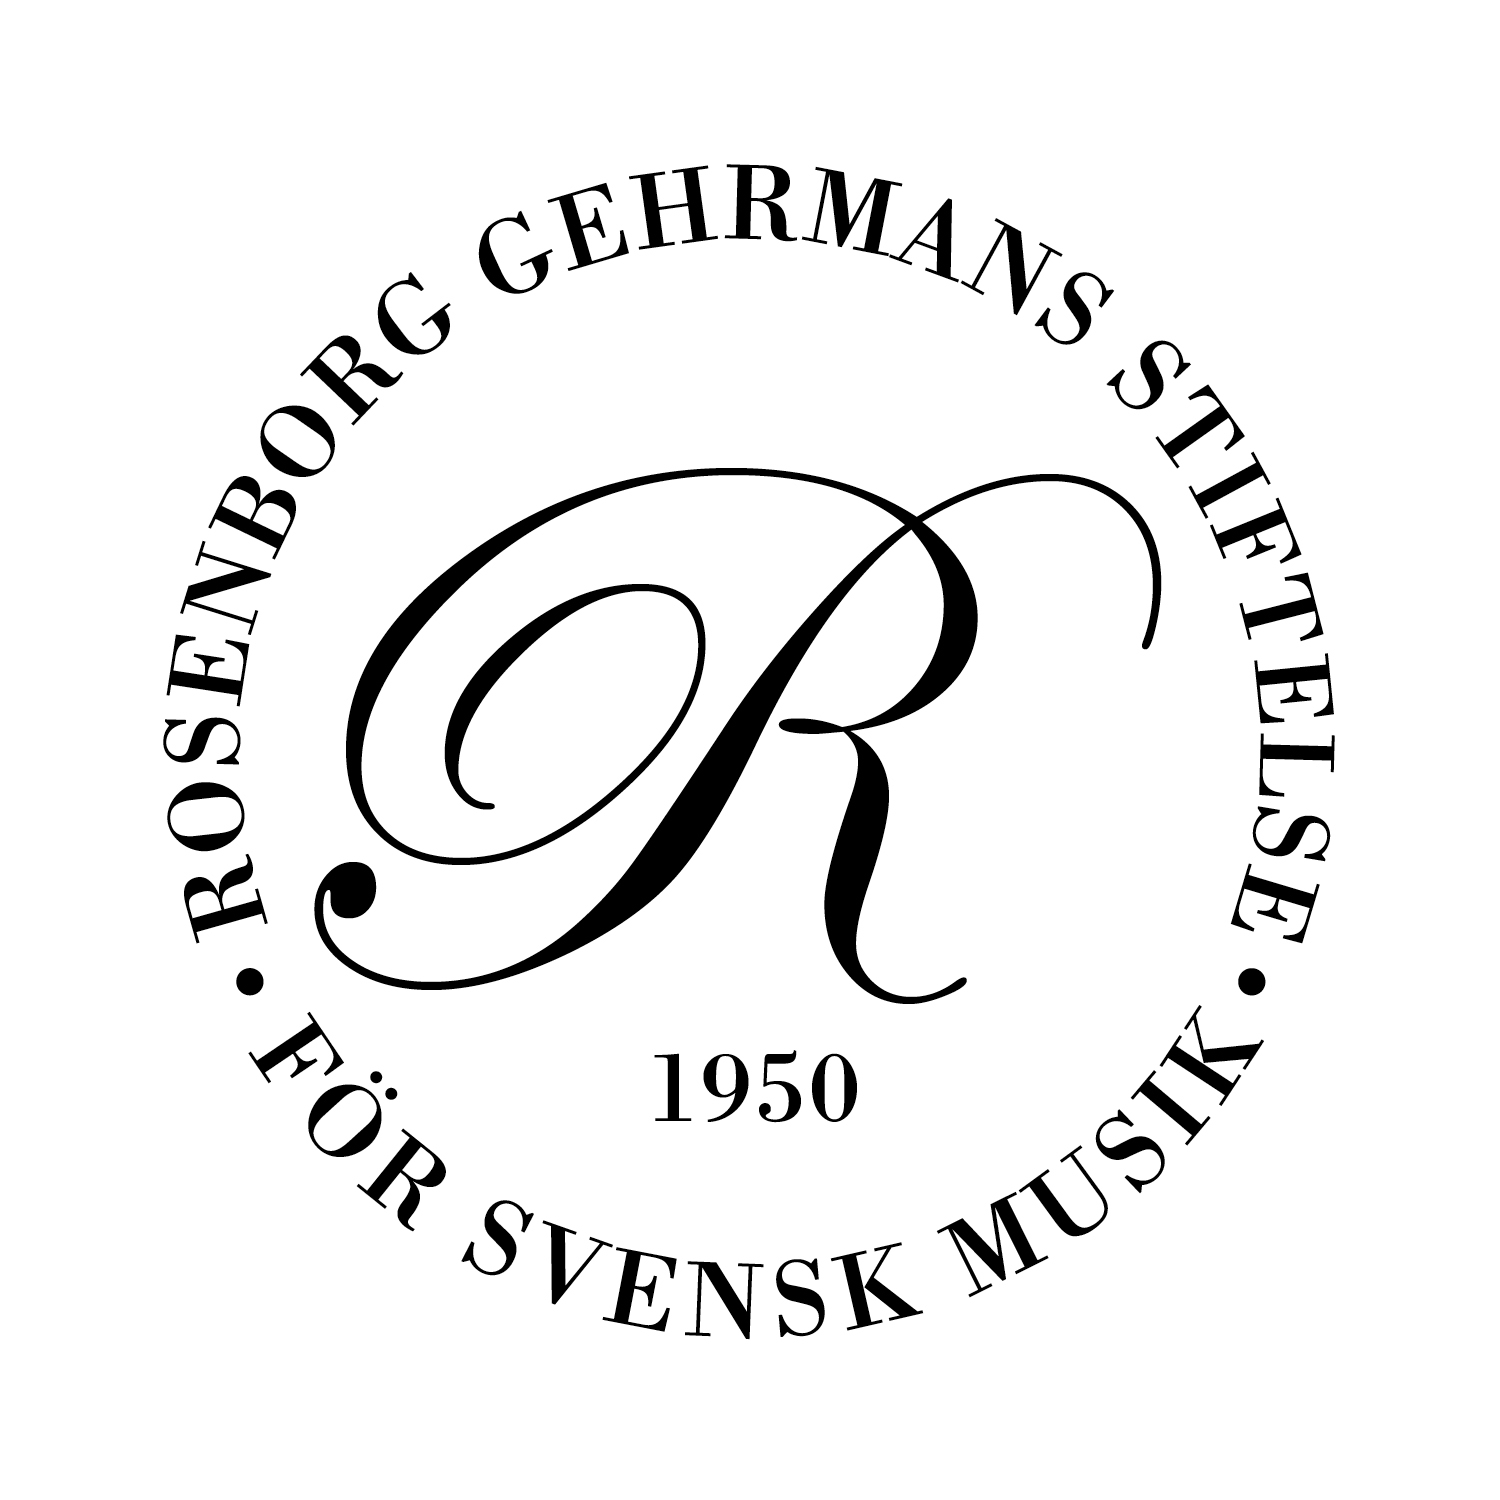 Rosenborg Gehrmans stiftelse